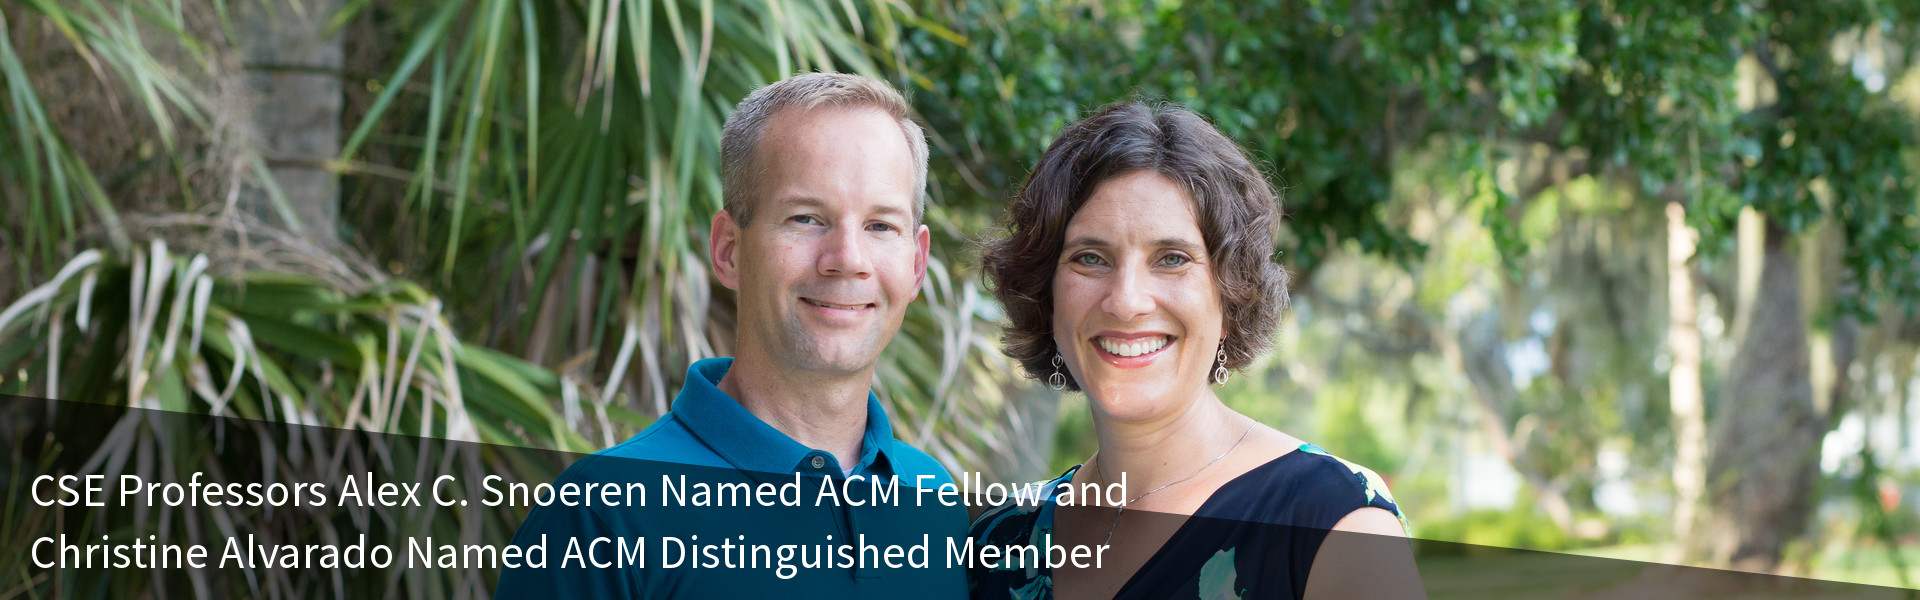 CSE Professors Alex C. Snoeren Named ACM Fellow and Christine Alvarado Named ACM Distinguished Member